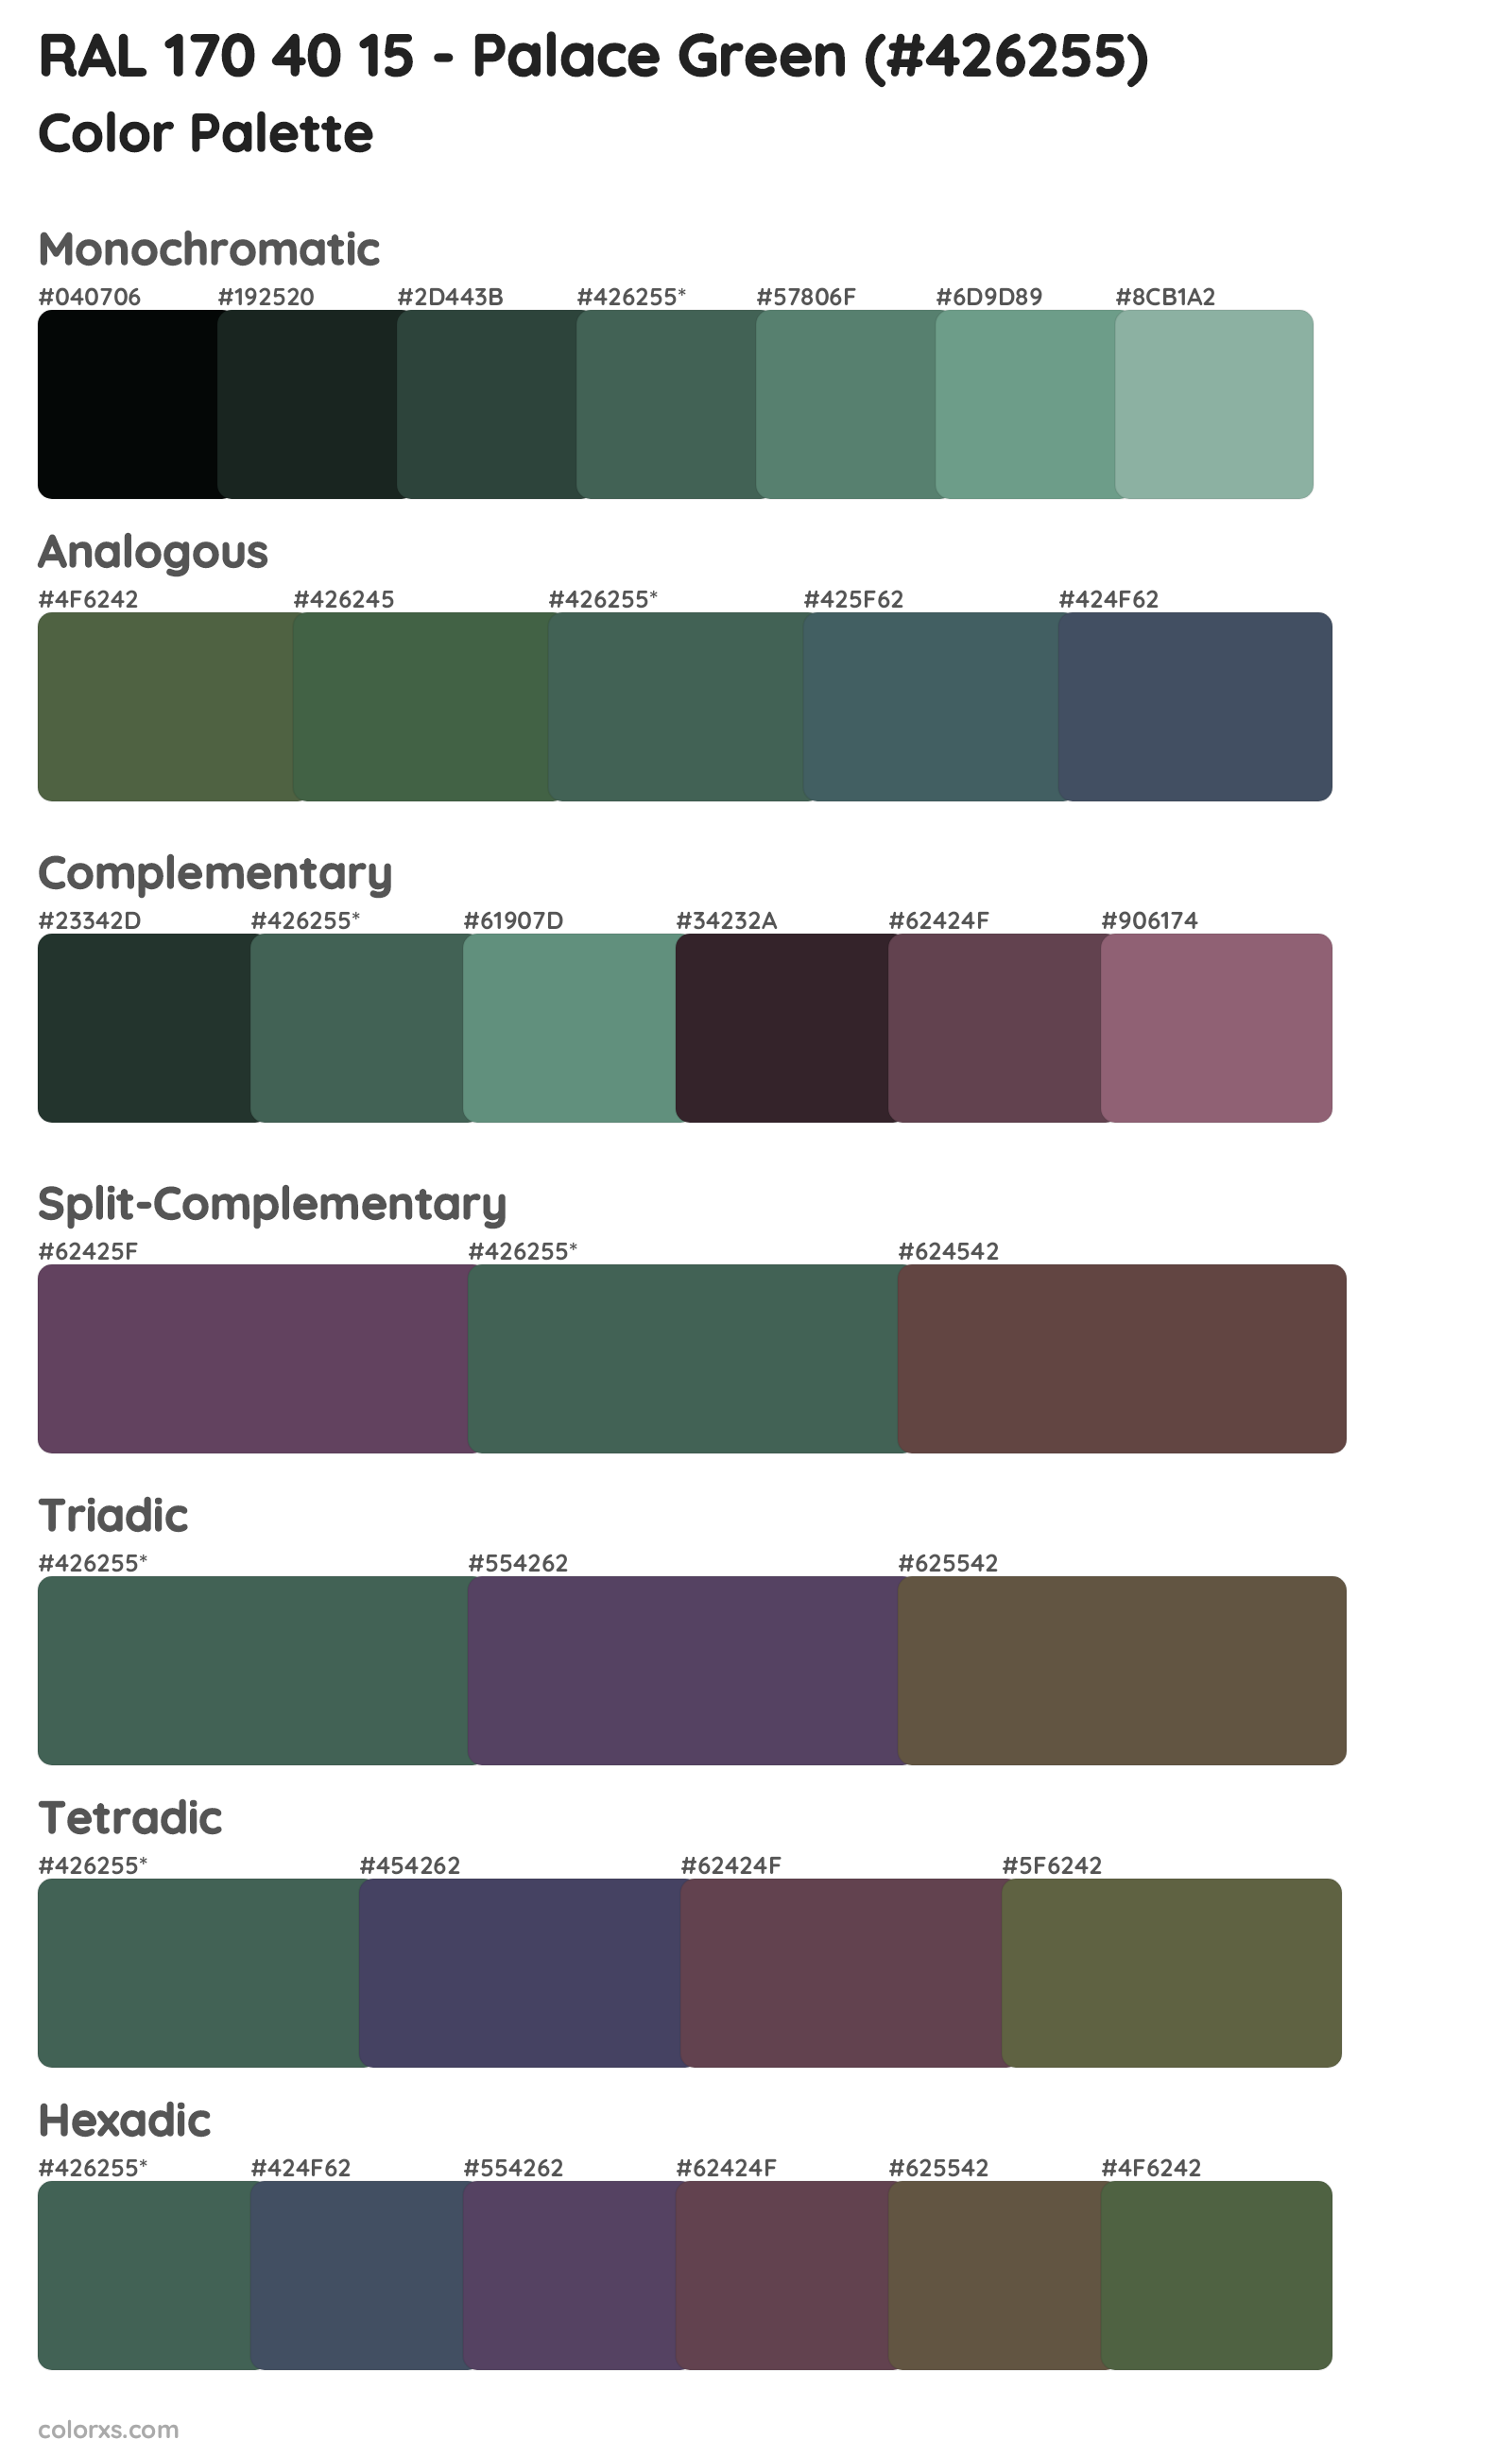 RAL 170 40 15 - Palace Green Color Scheme Palettes